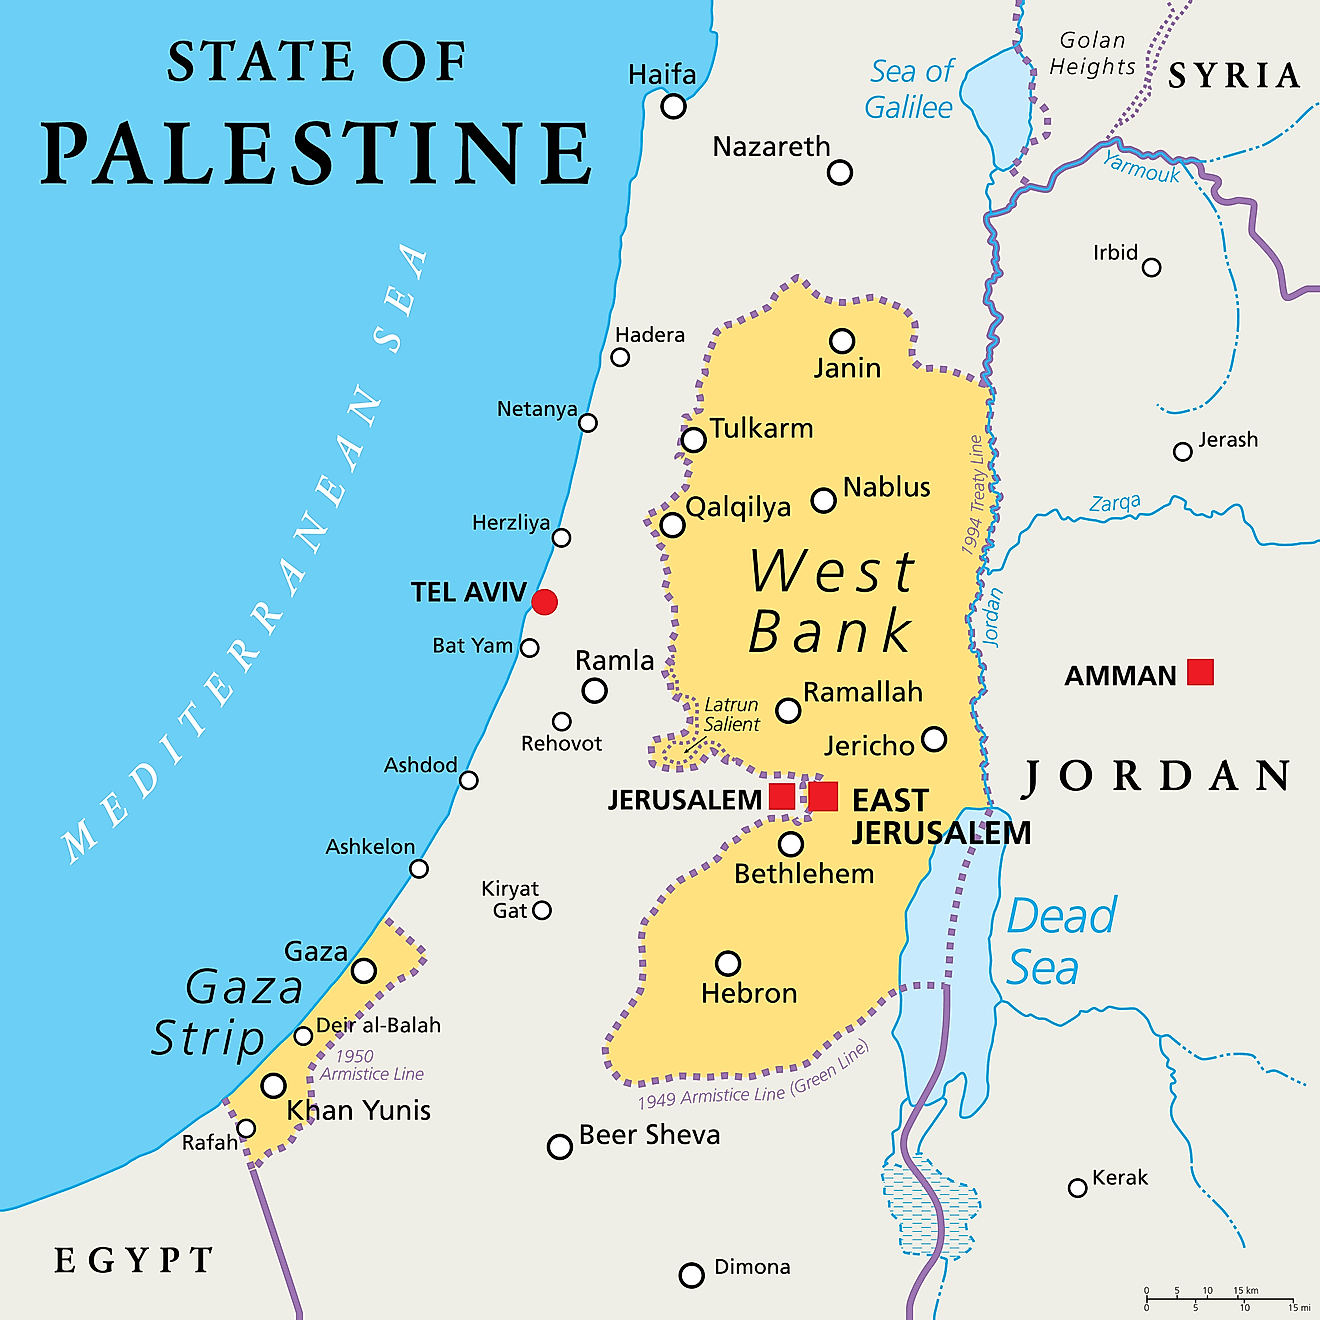 Mapa Político de Palestina